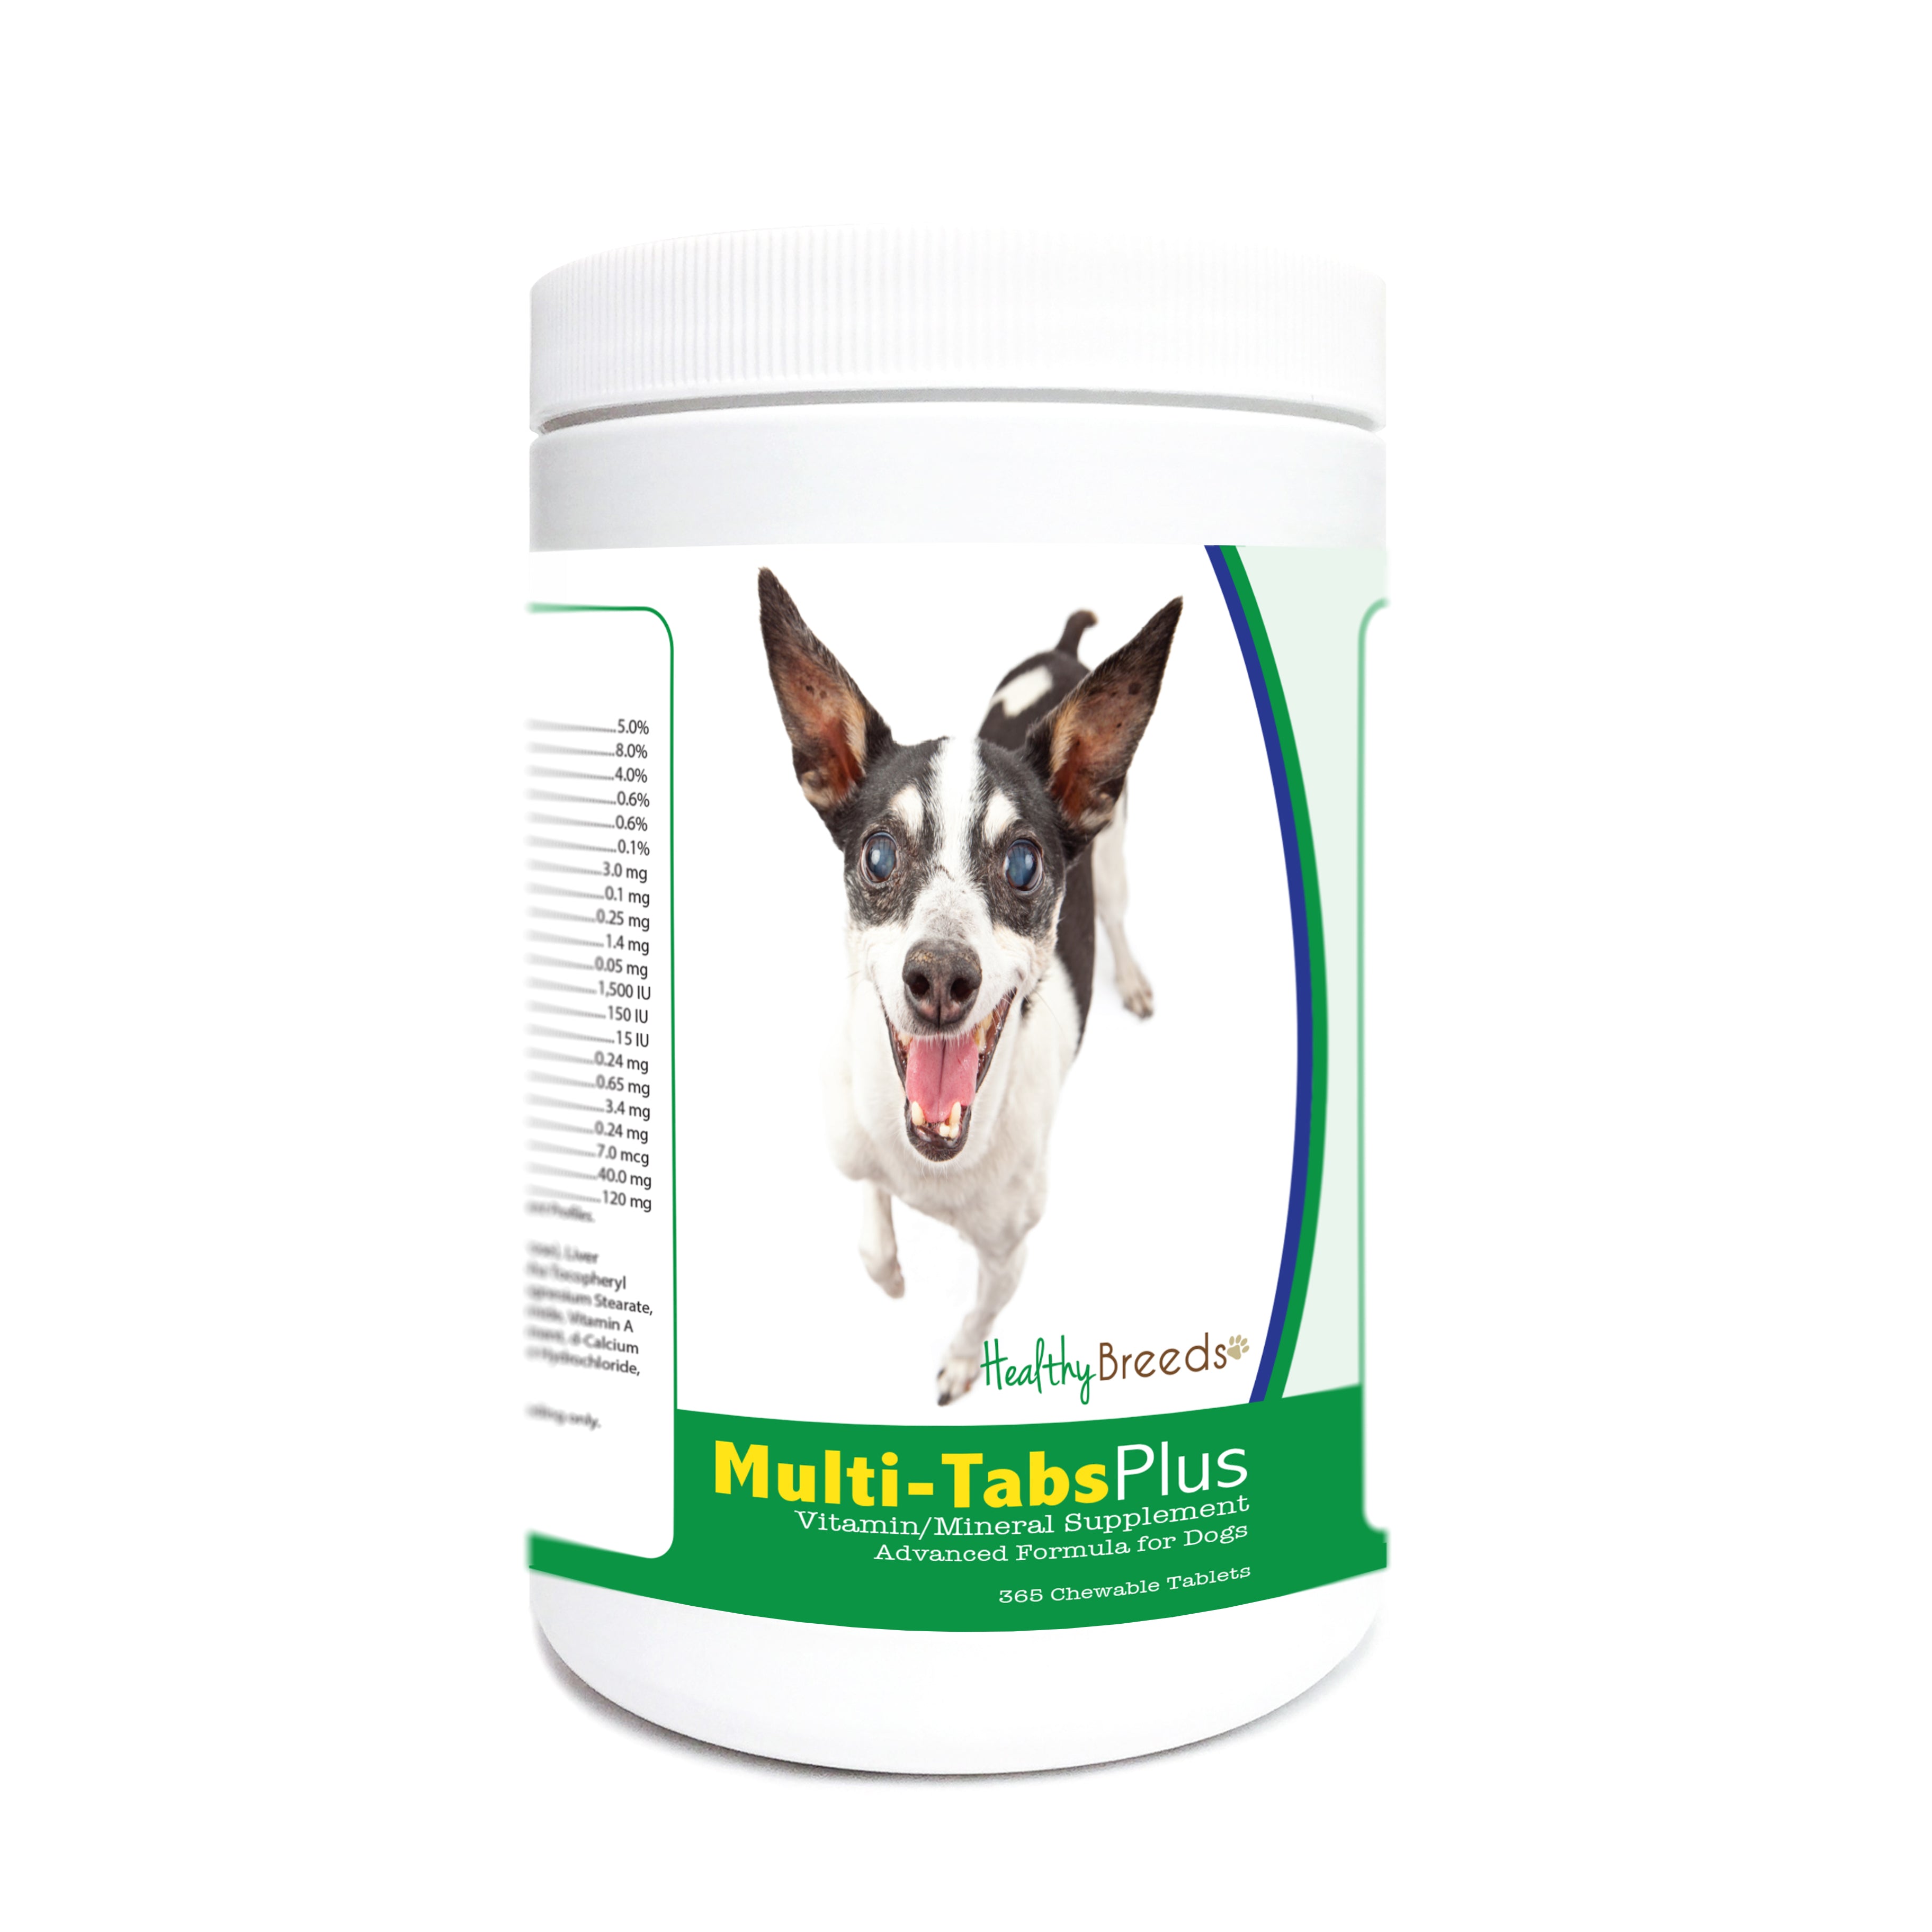 Rat Terrier Multi-Tabs Plus Chewable Tablets 365 Count